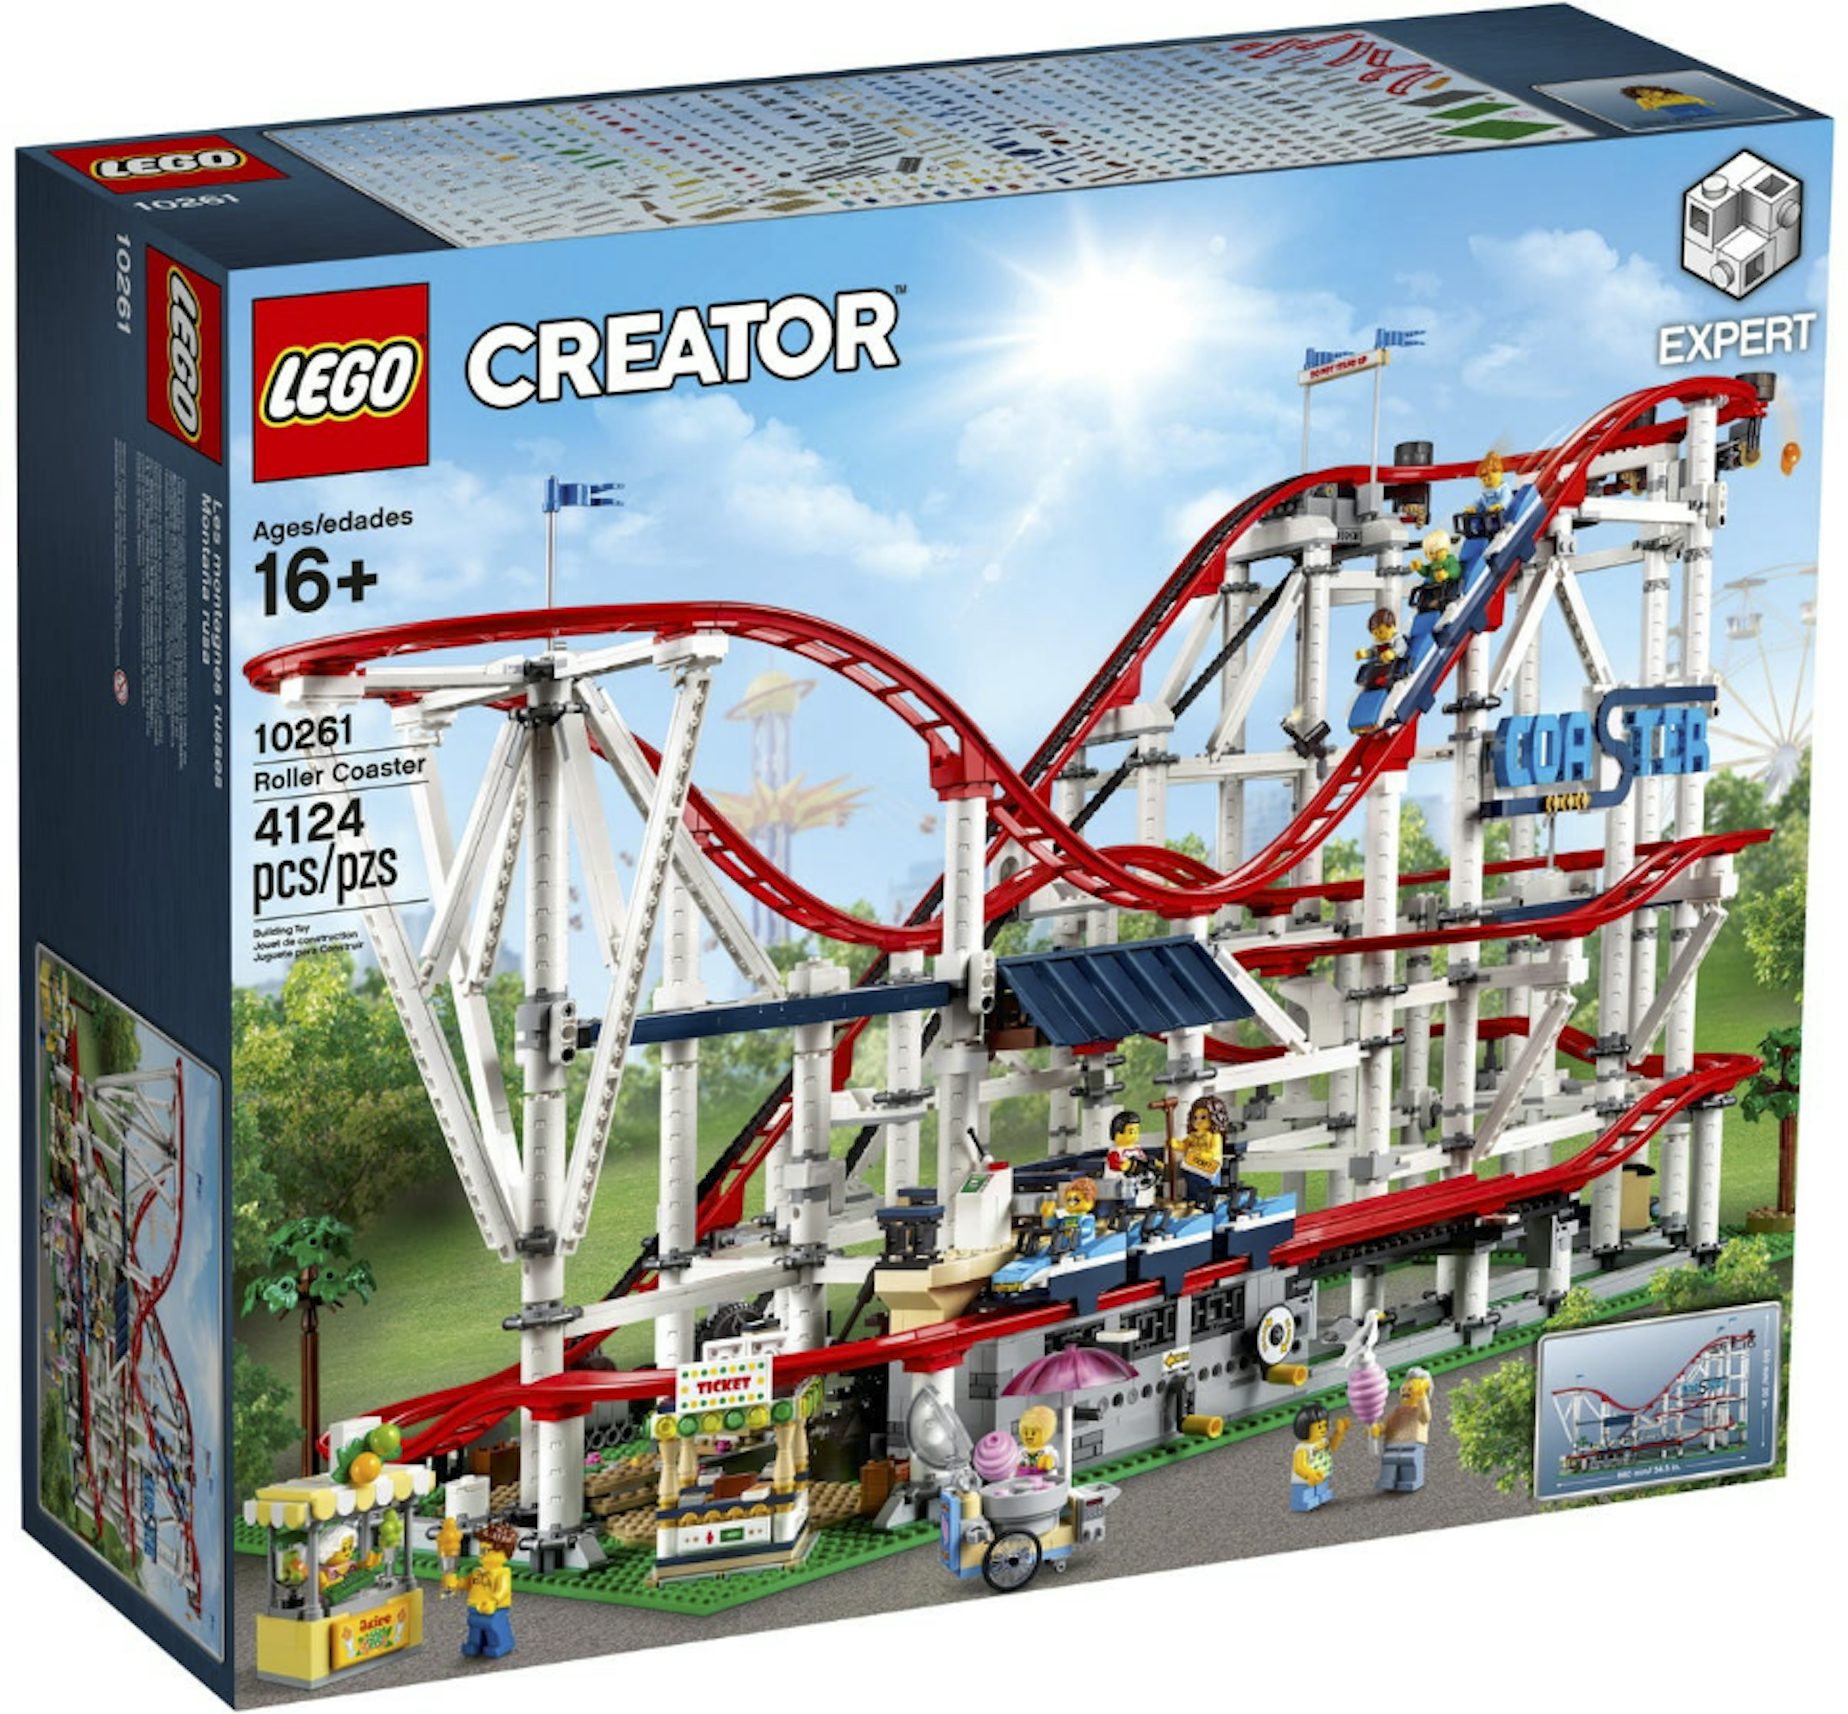 https://images.stockx.com/images/LEGO-Roller-Coaster-Set-10261.png?fit=fill&bg=FFFFFF&w=1200&h=857&fm=jpg&auto=compress&dpr=2&trim=color&updated_at=1646413534&q=60